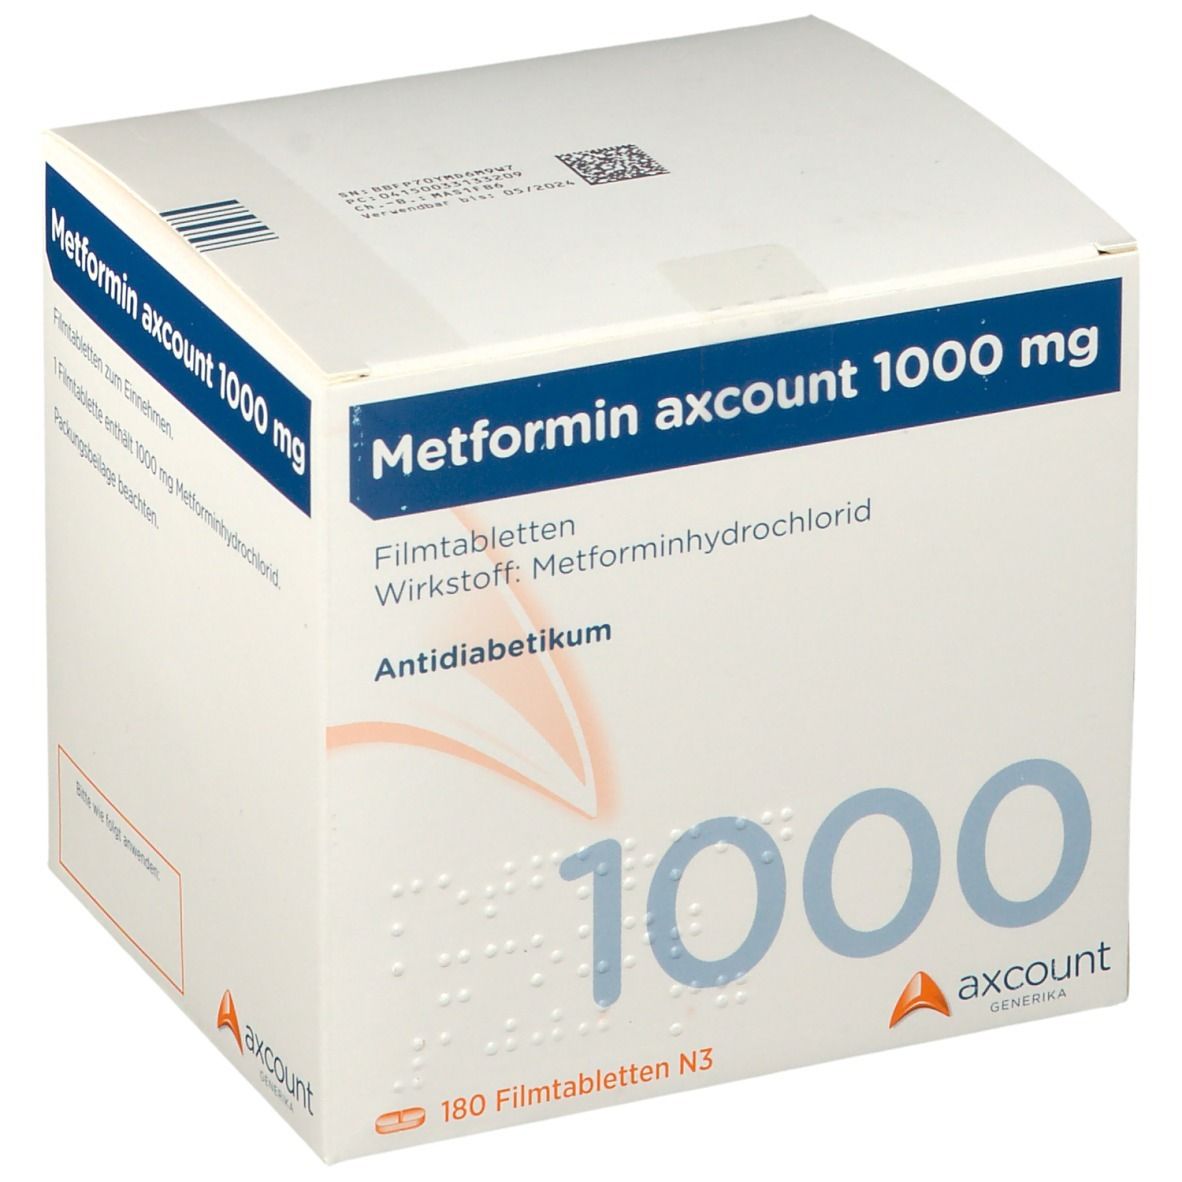 Metformin axcount 1000 mg